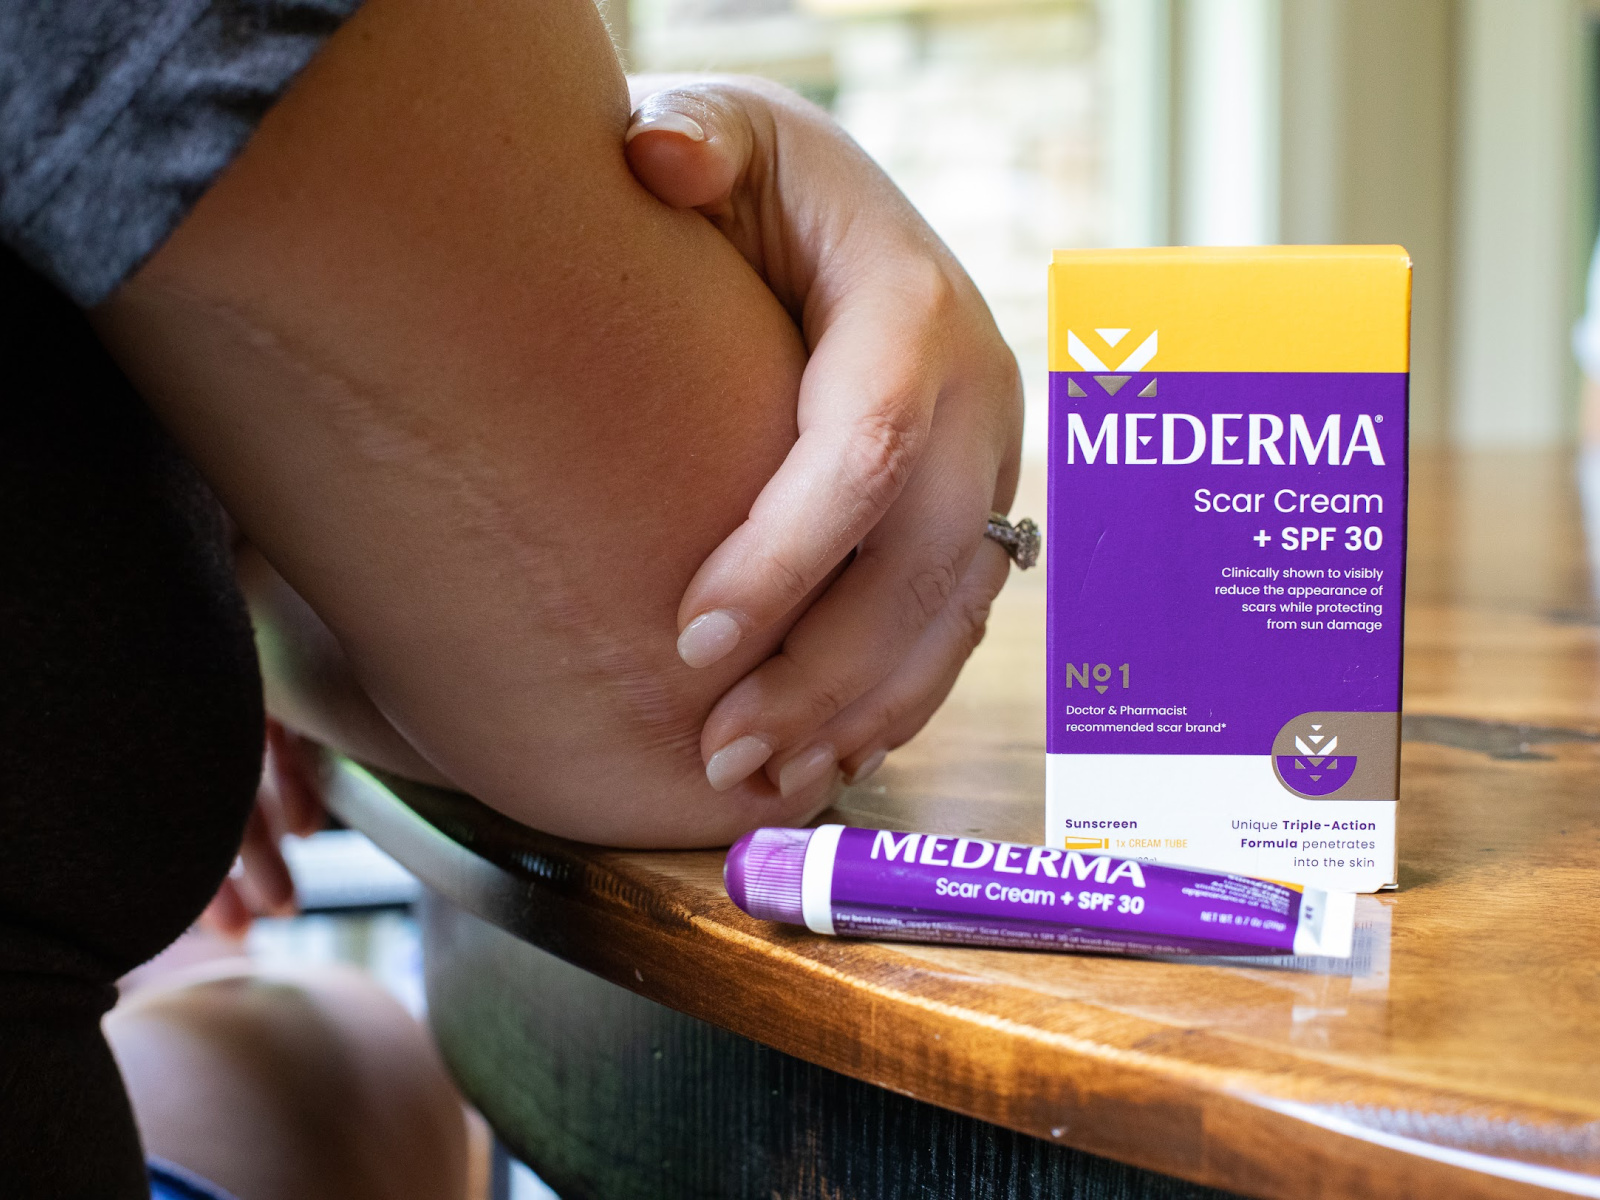 Mederma Scar Cream + SPF 30 Just $5.99 At Publix (Regular Price $19.99) – Ends 8/6